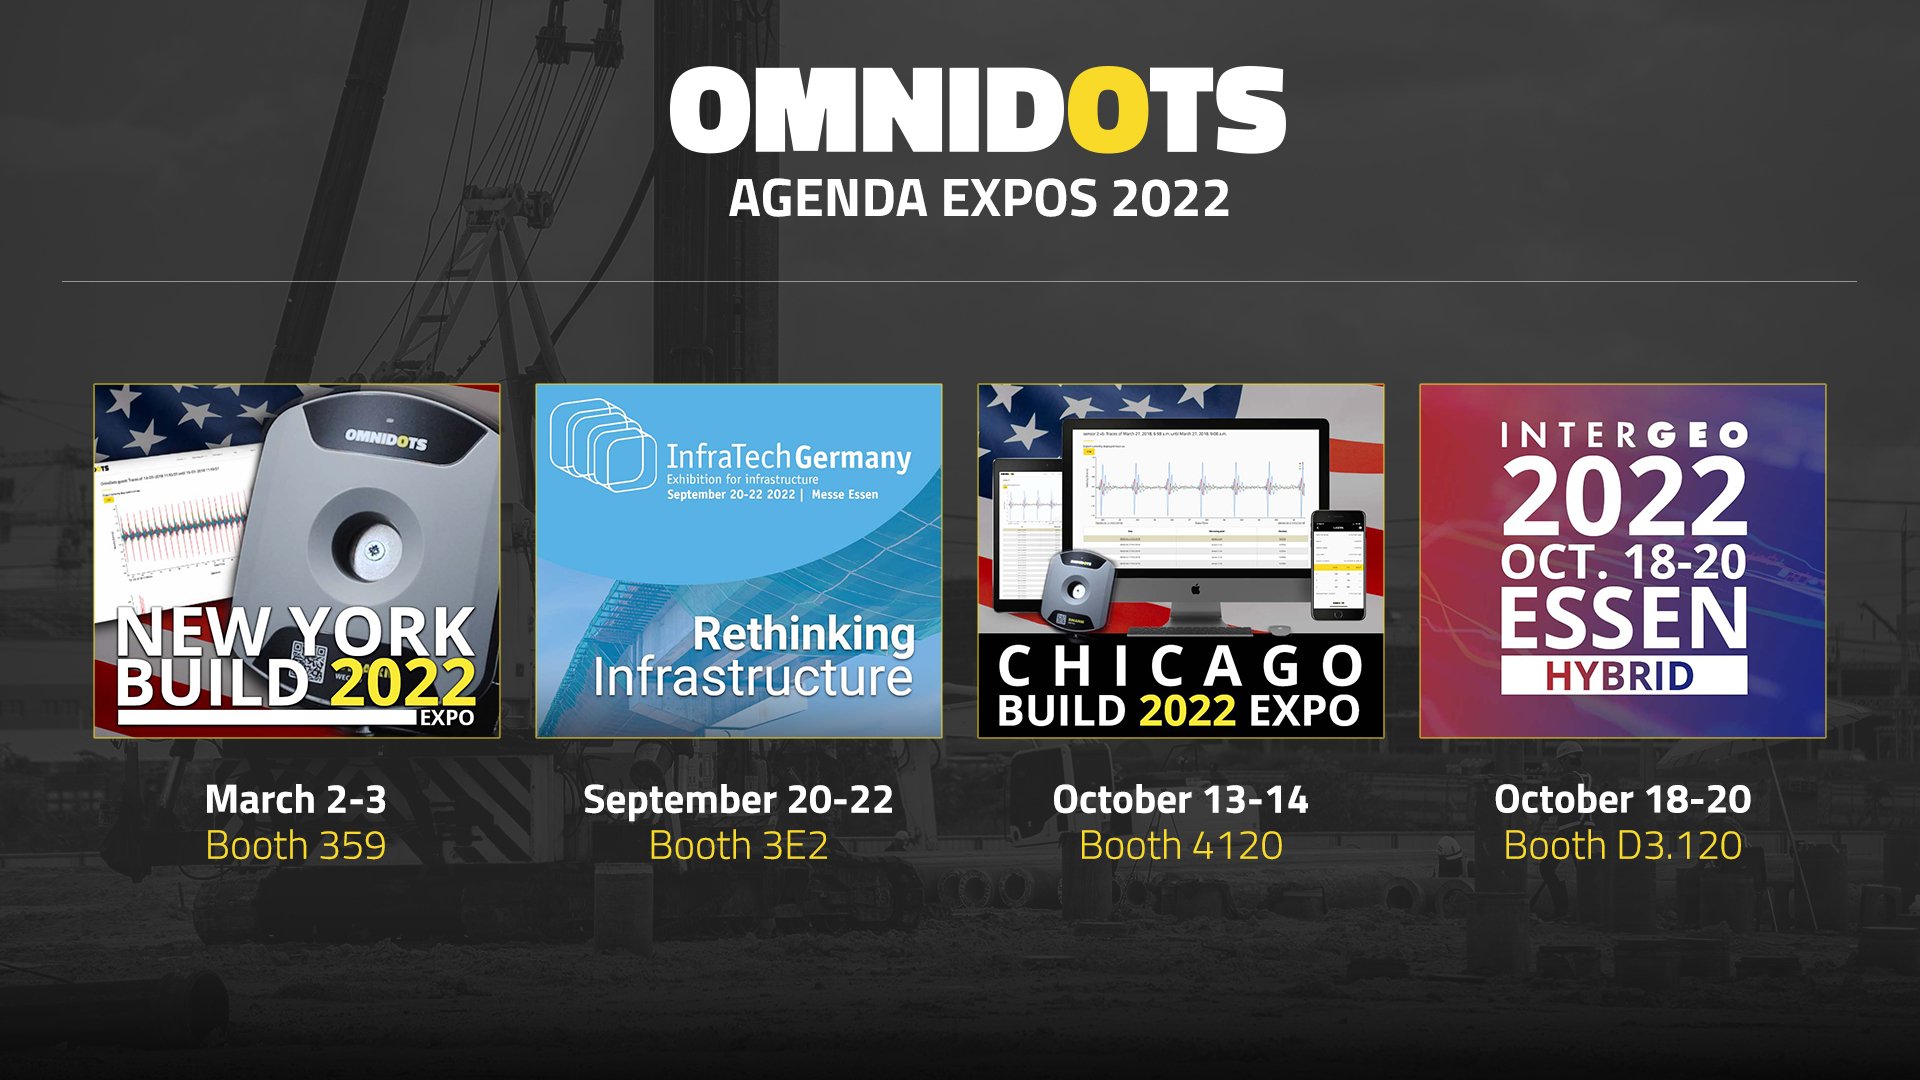 Omnidots Expo-agenda 2022